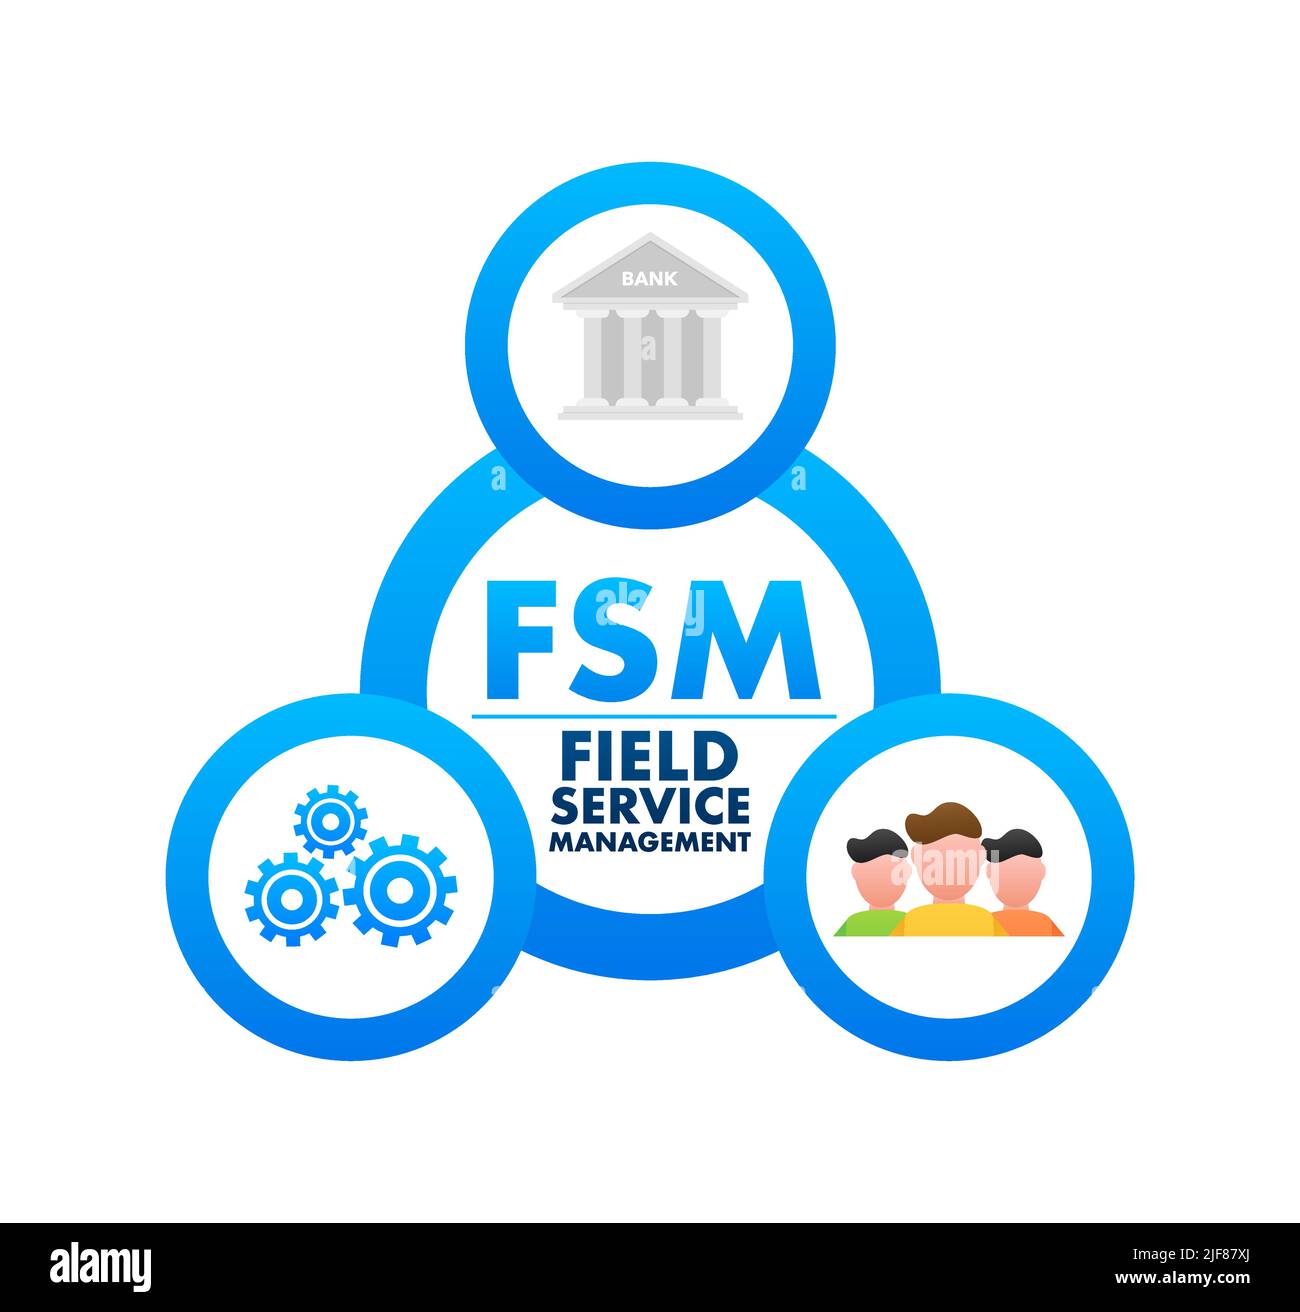 FSM - Field Service Management. Marketingmaterialien. Vektorgrafik. Stock Vektor